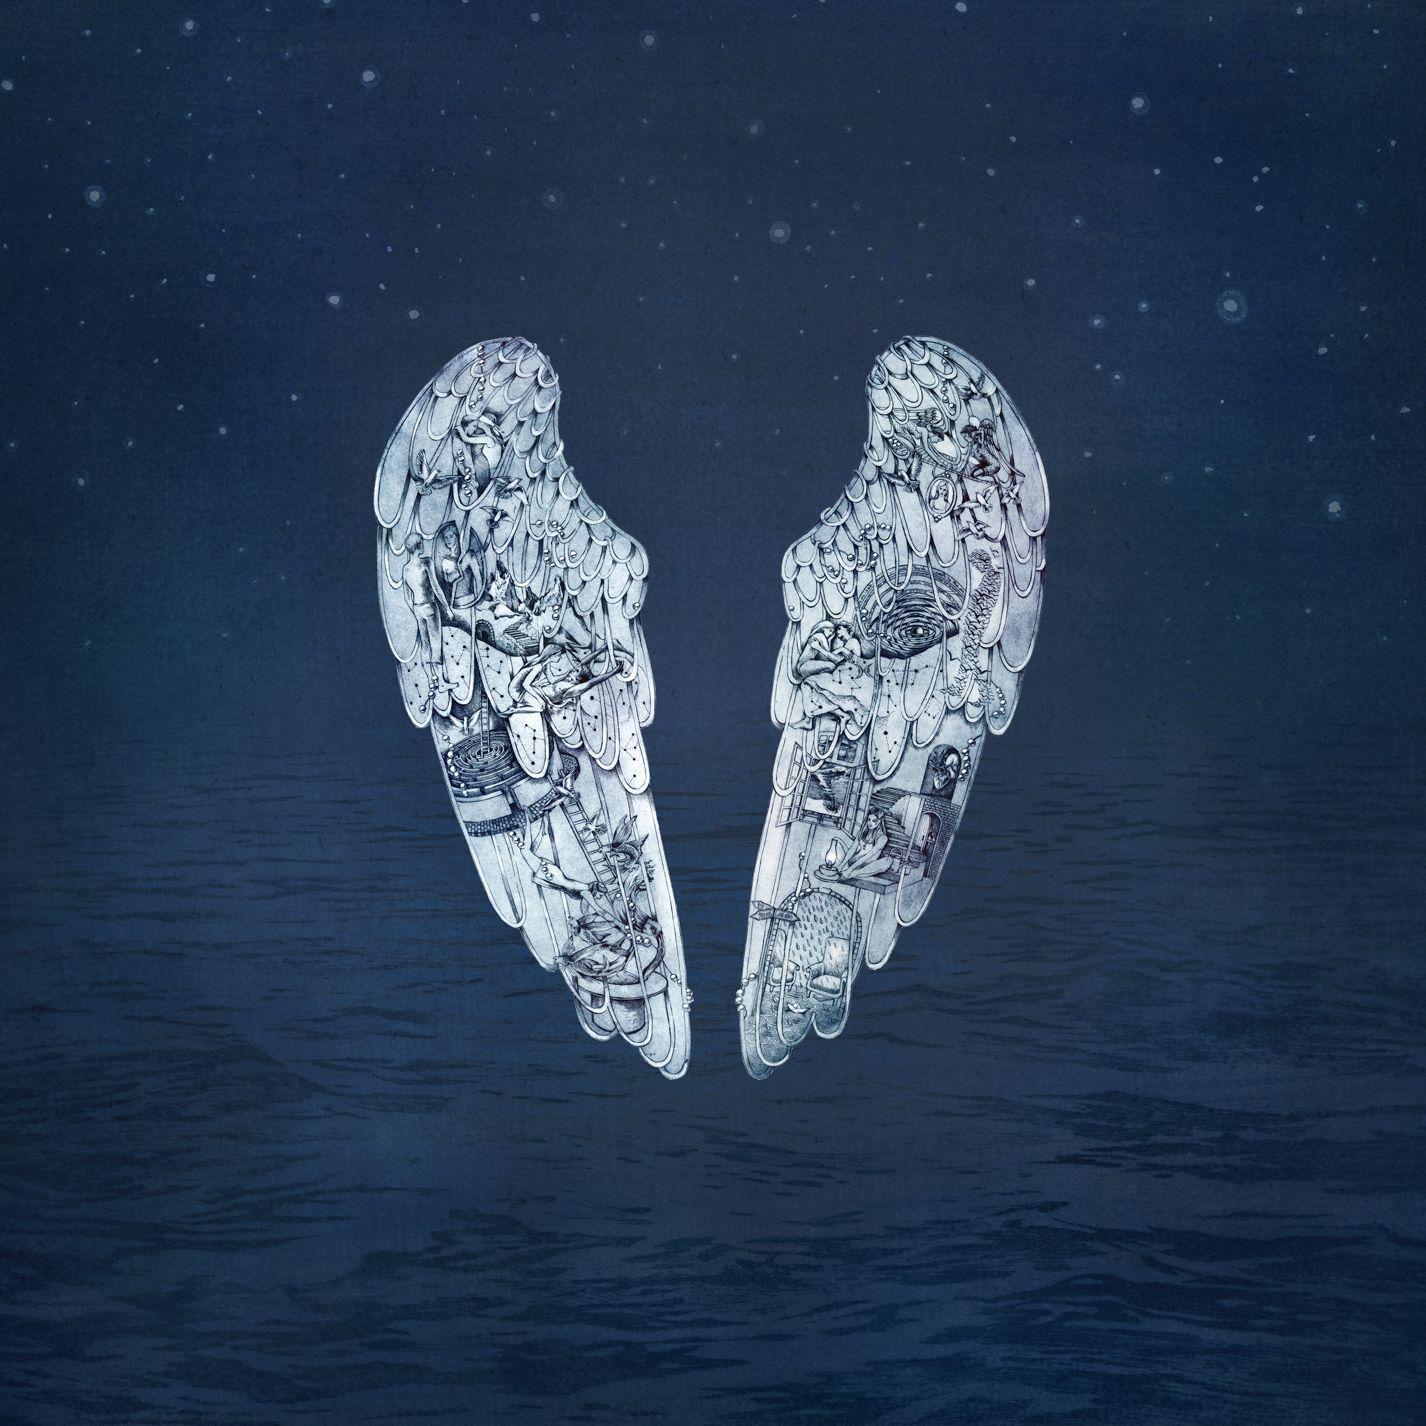 A Sky Full of Stars歌词 歌手Coldplay-专辑Ghost Stories-单曲《A Sky Full of Stars》LRC歌词下载